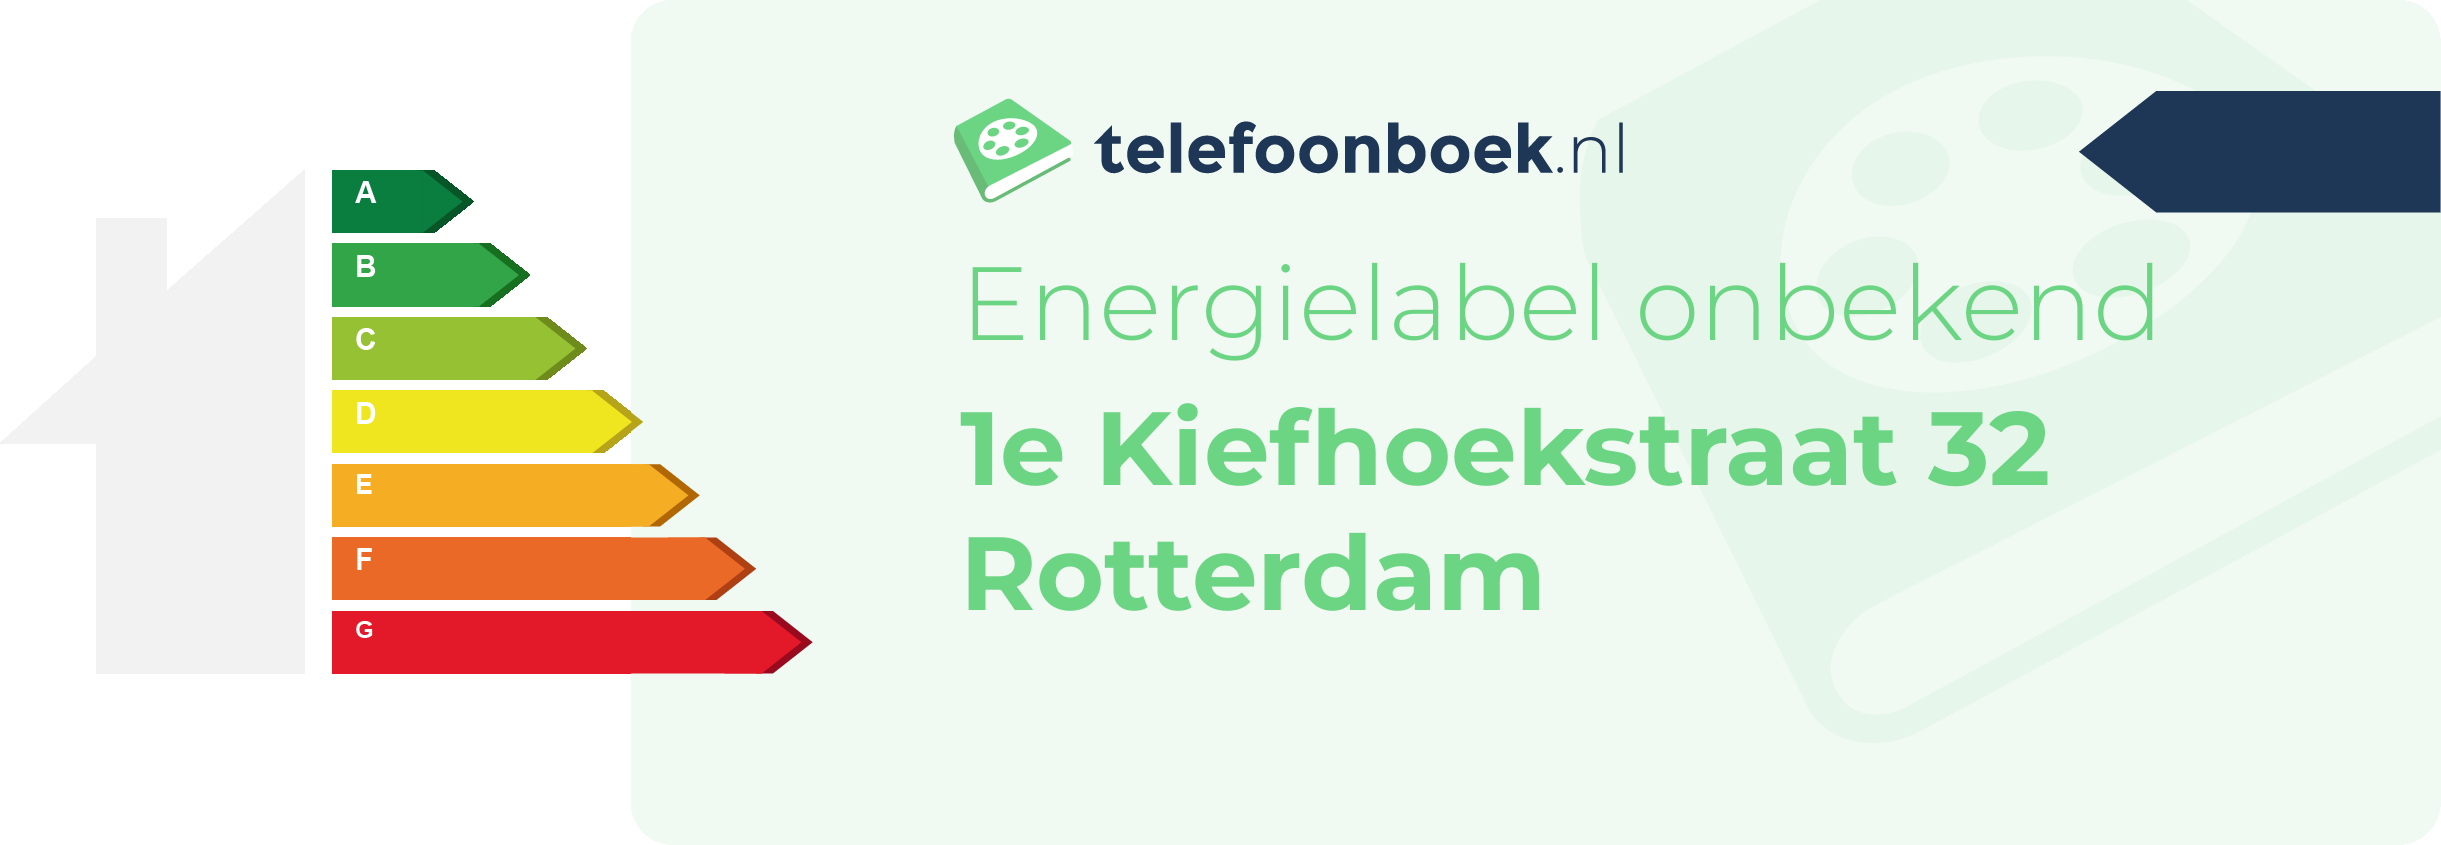 Energielabel 1e Kiefhoekstraat 32 Rotterdam